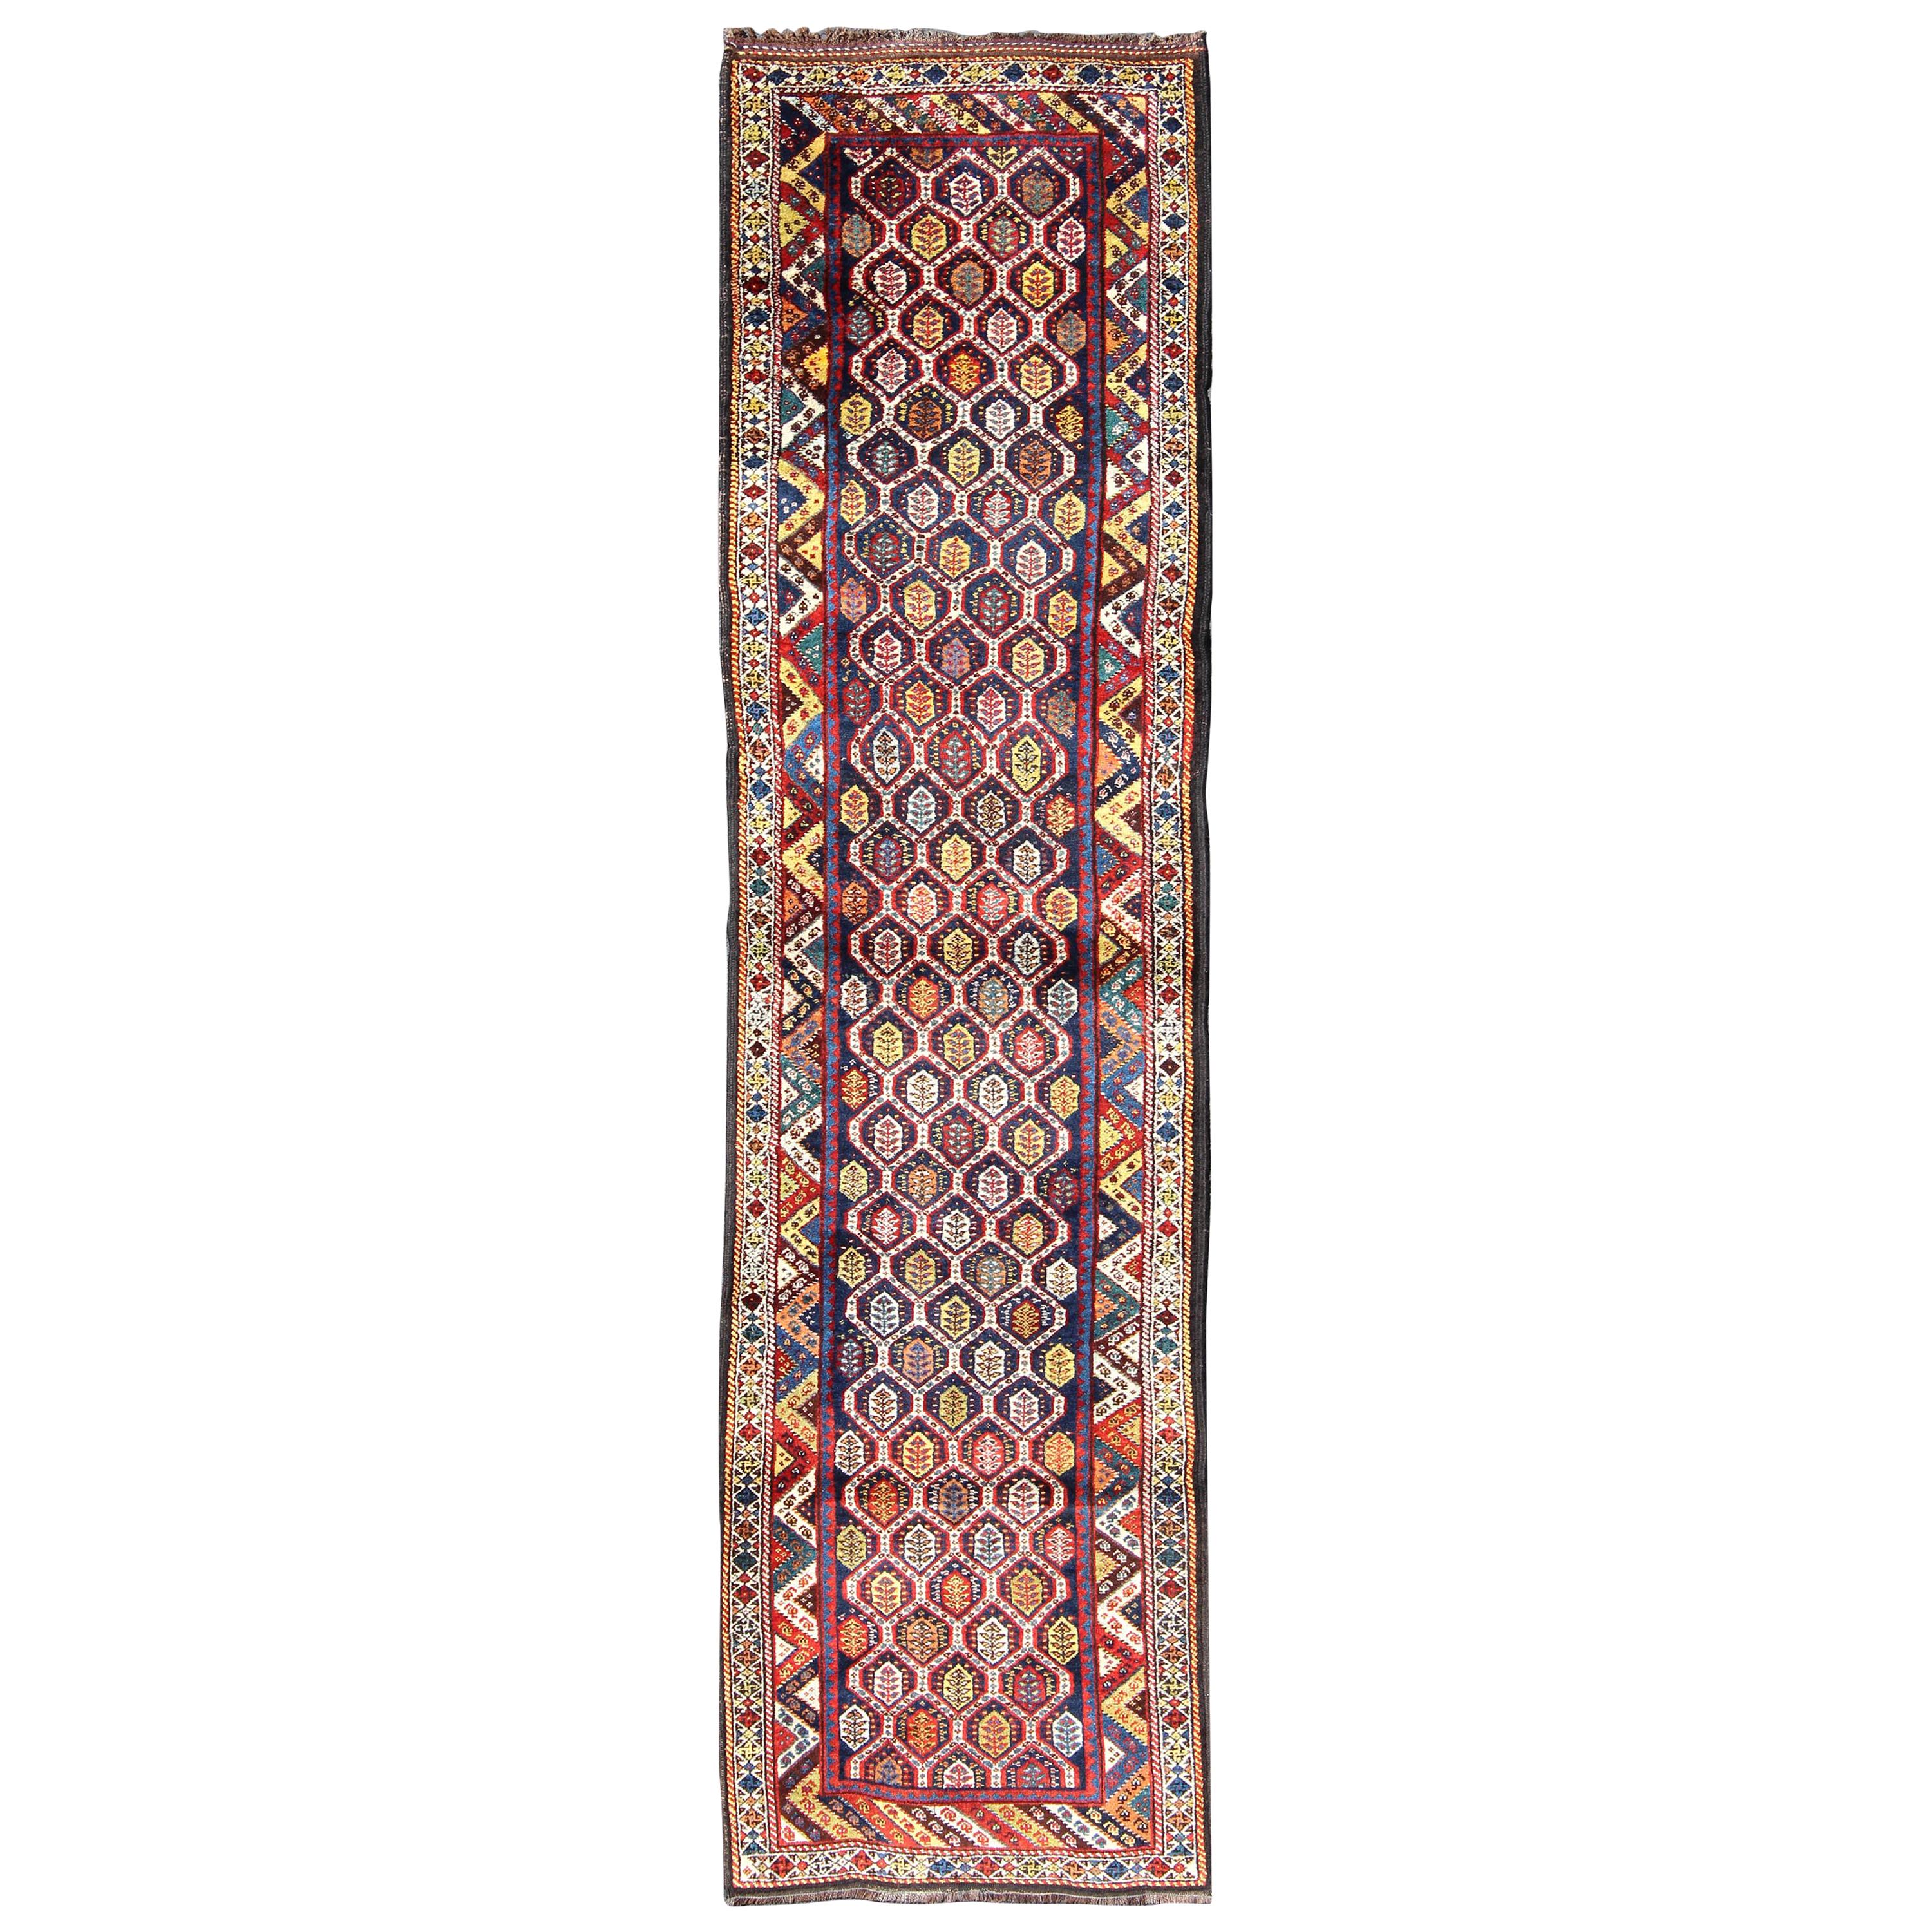 Colorful Antique Persian Lori Runner with Repeating Geometric Palmette Design